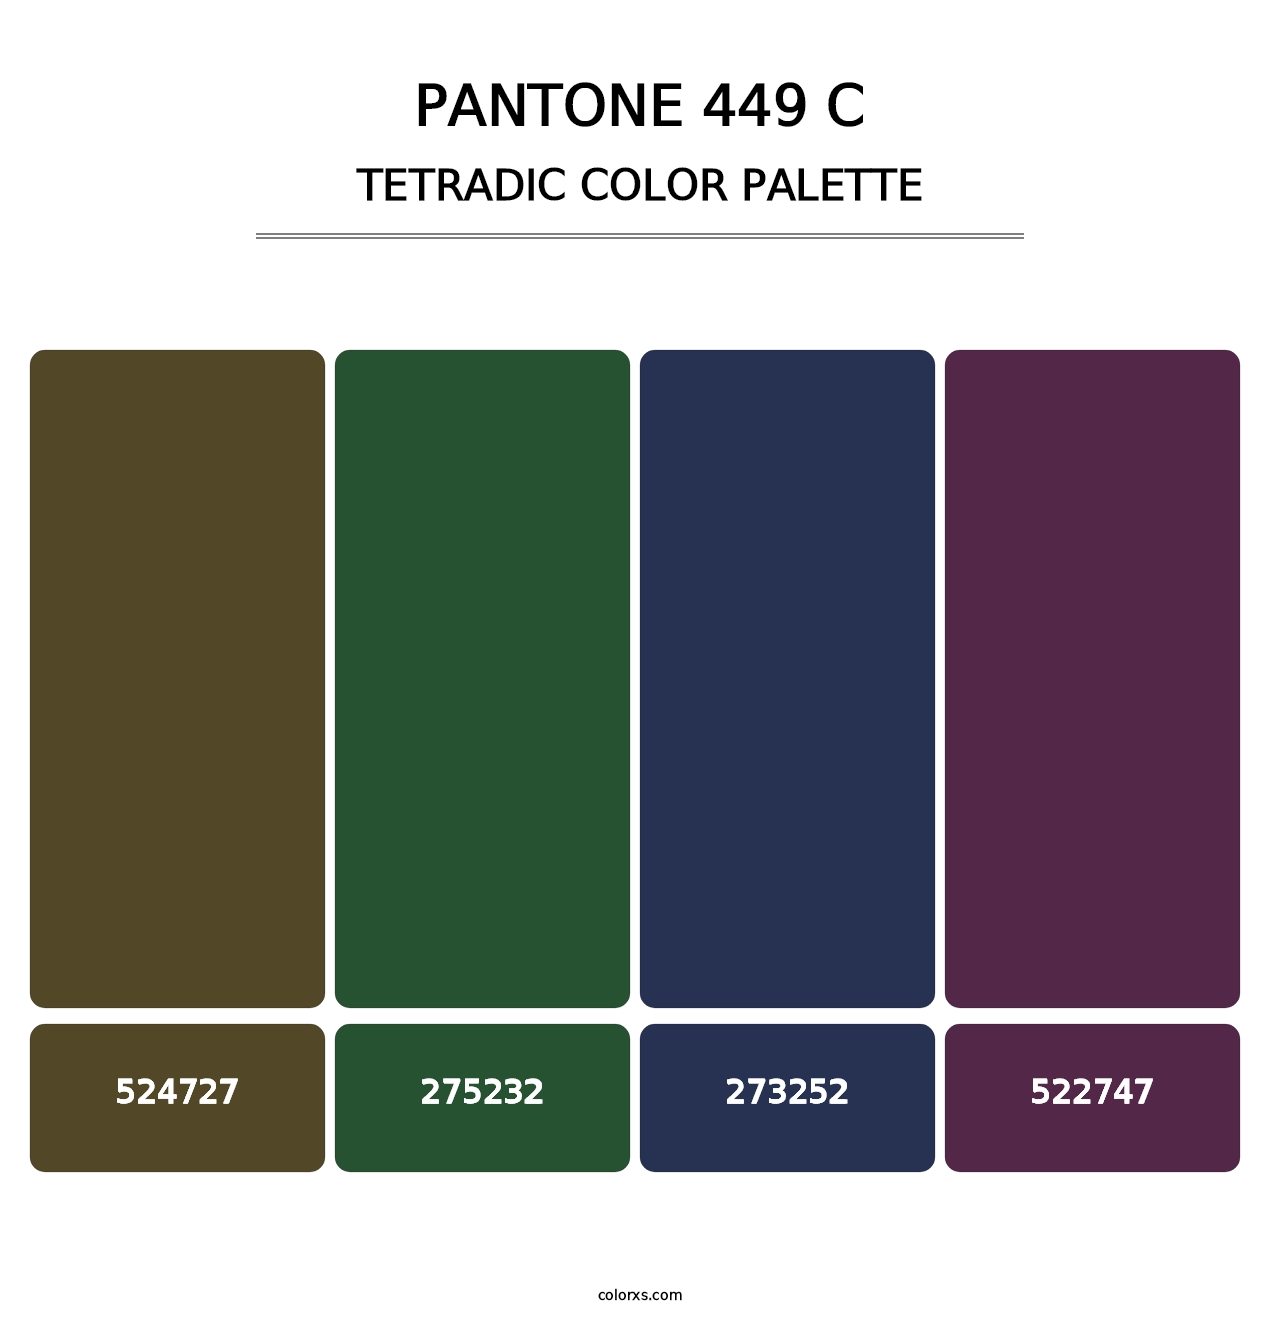 PANTONE 449 C - Tetradic Color Palette